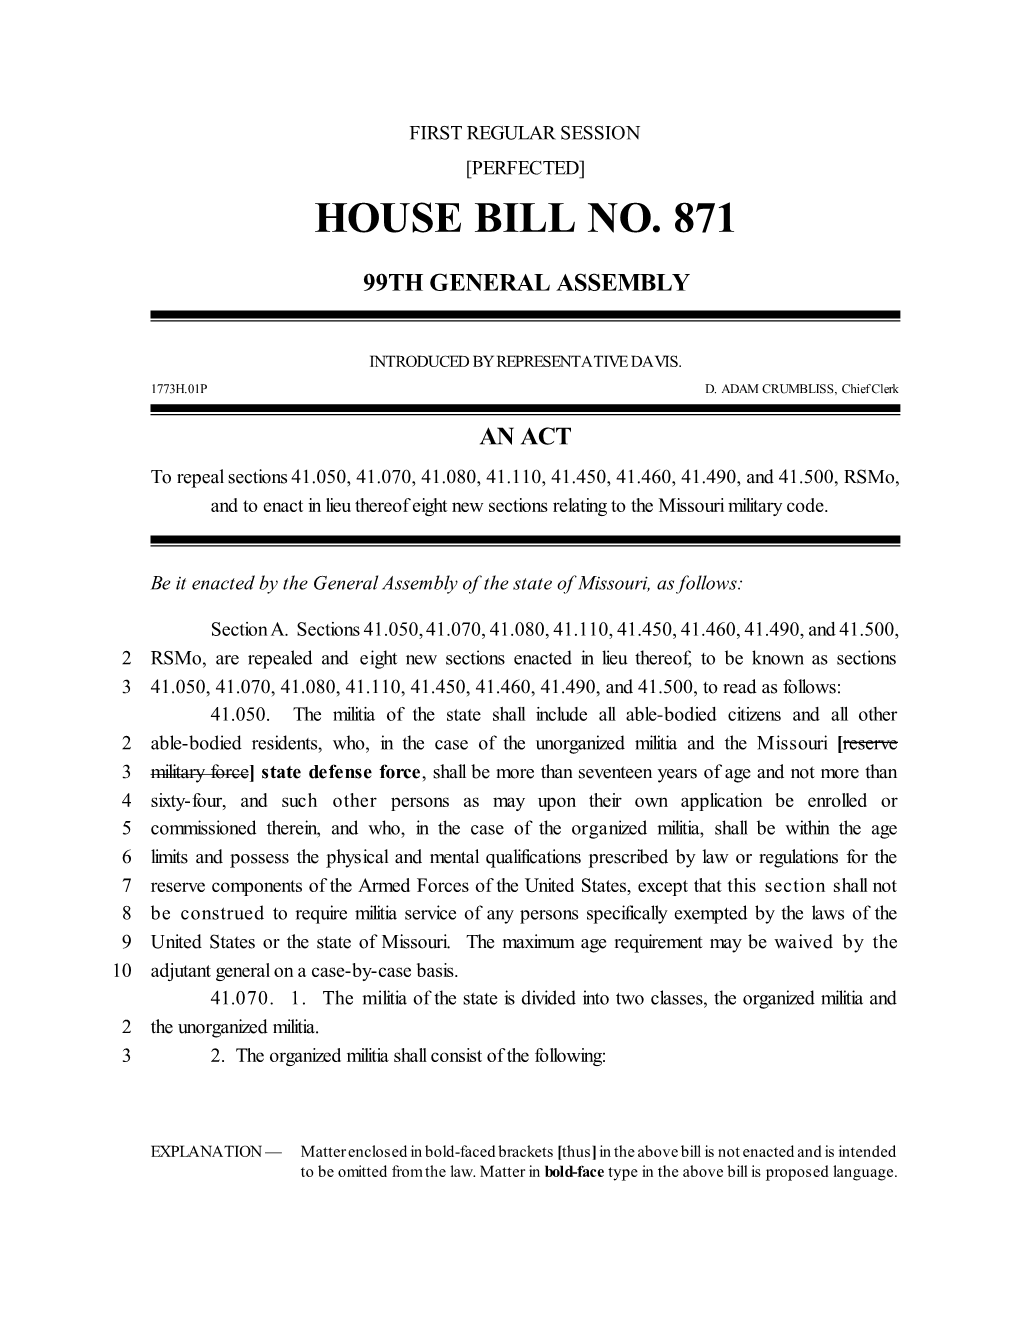 House Bill No. 871